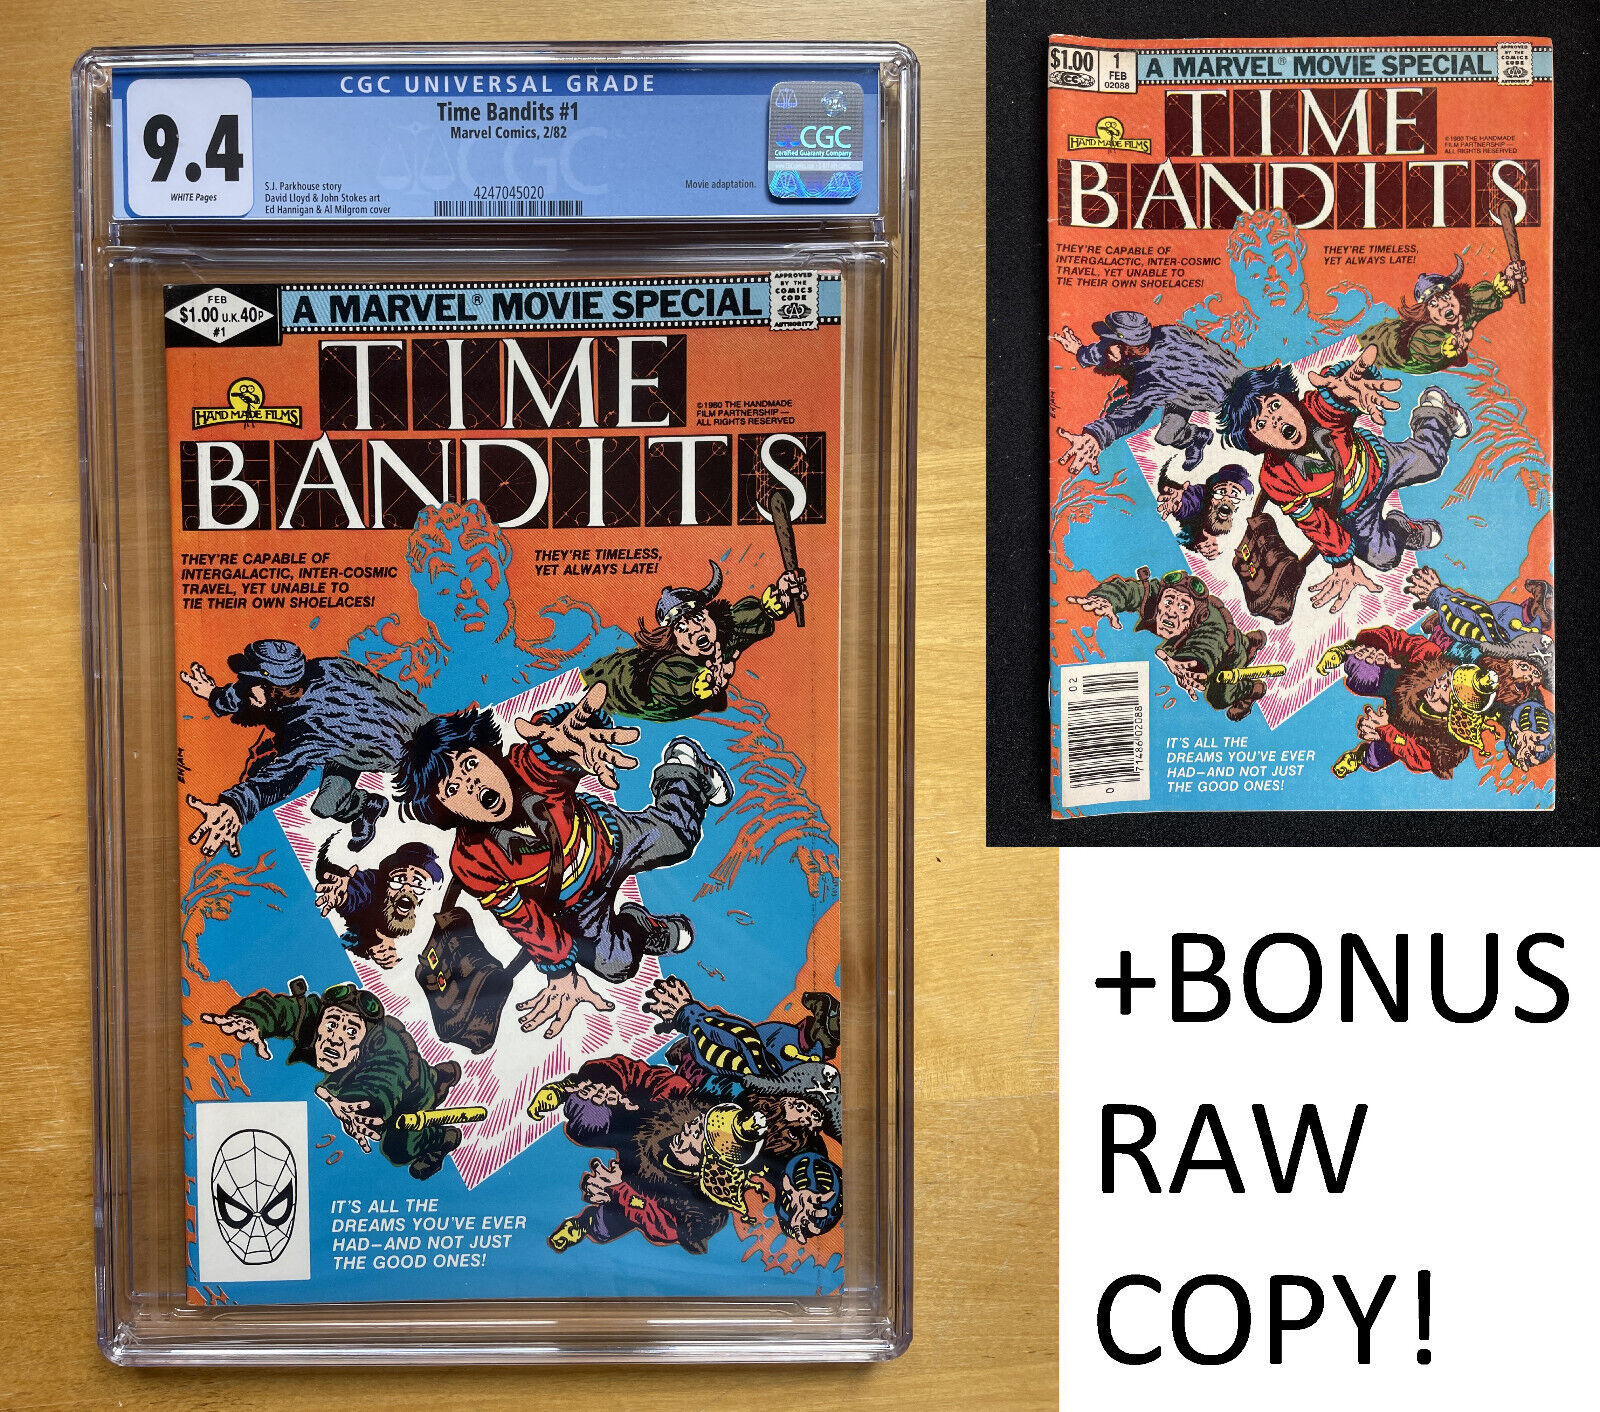 Time Bandits #1 CGC 9.4 (Marvel 1982) + BONUS RAW COPY Low census Terry Gilliam